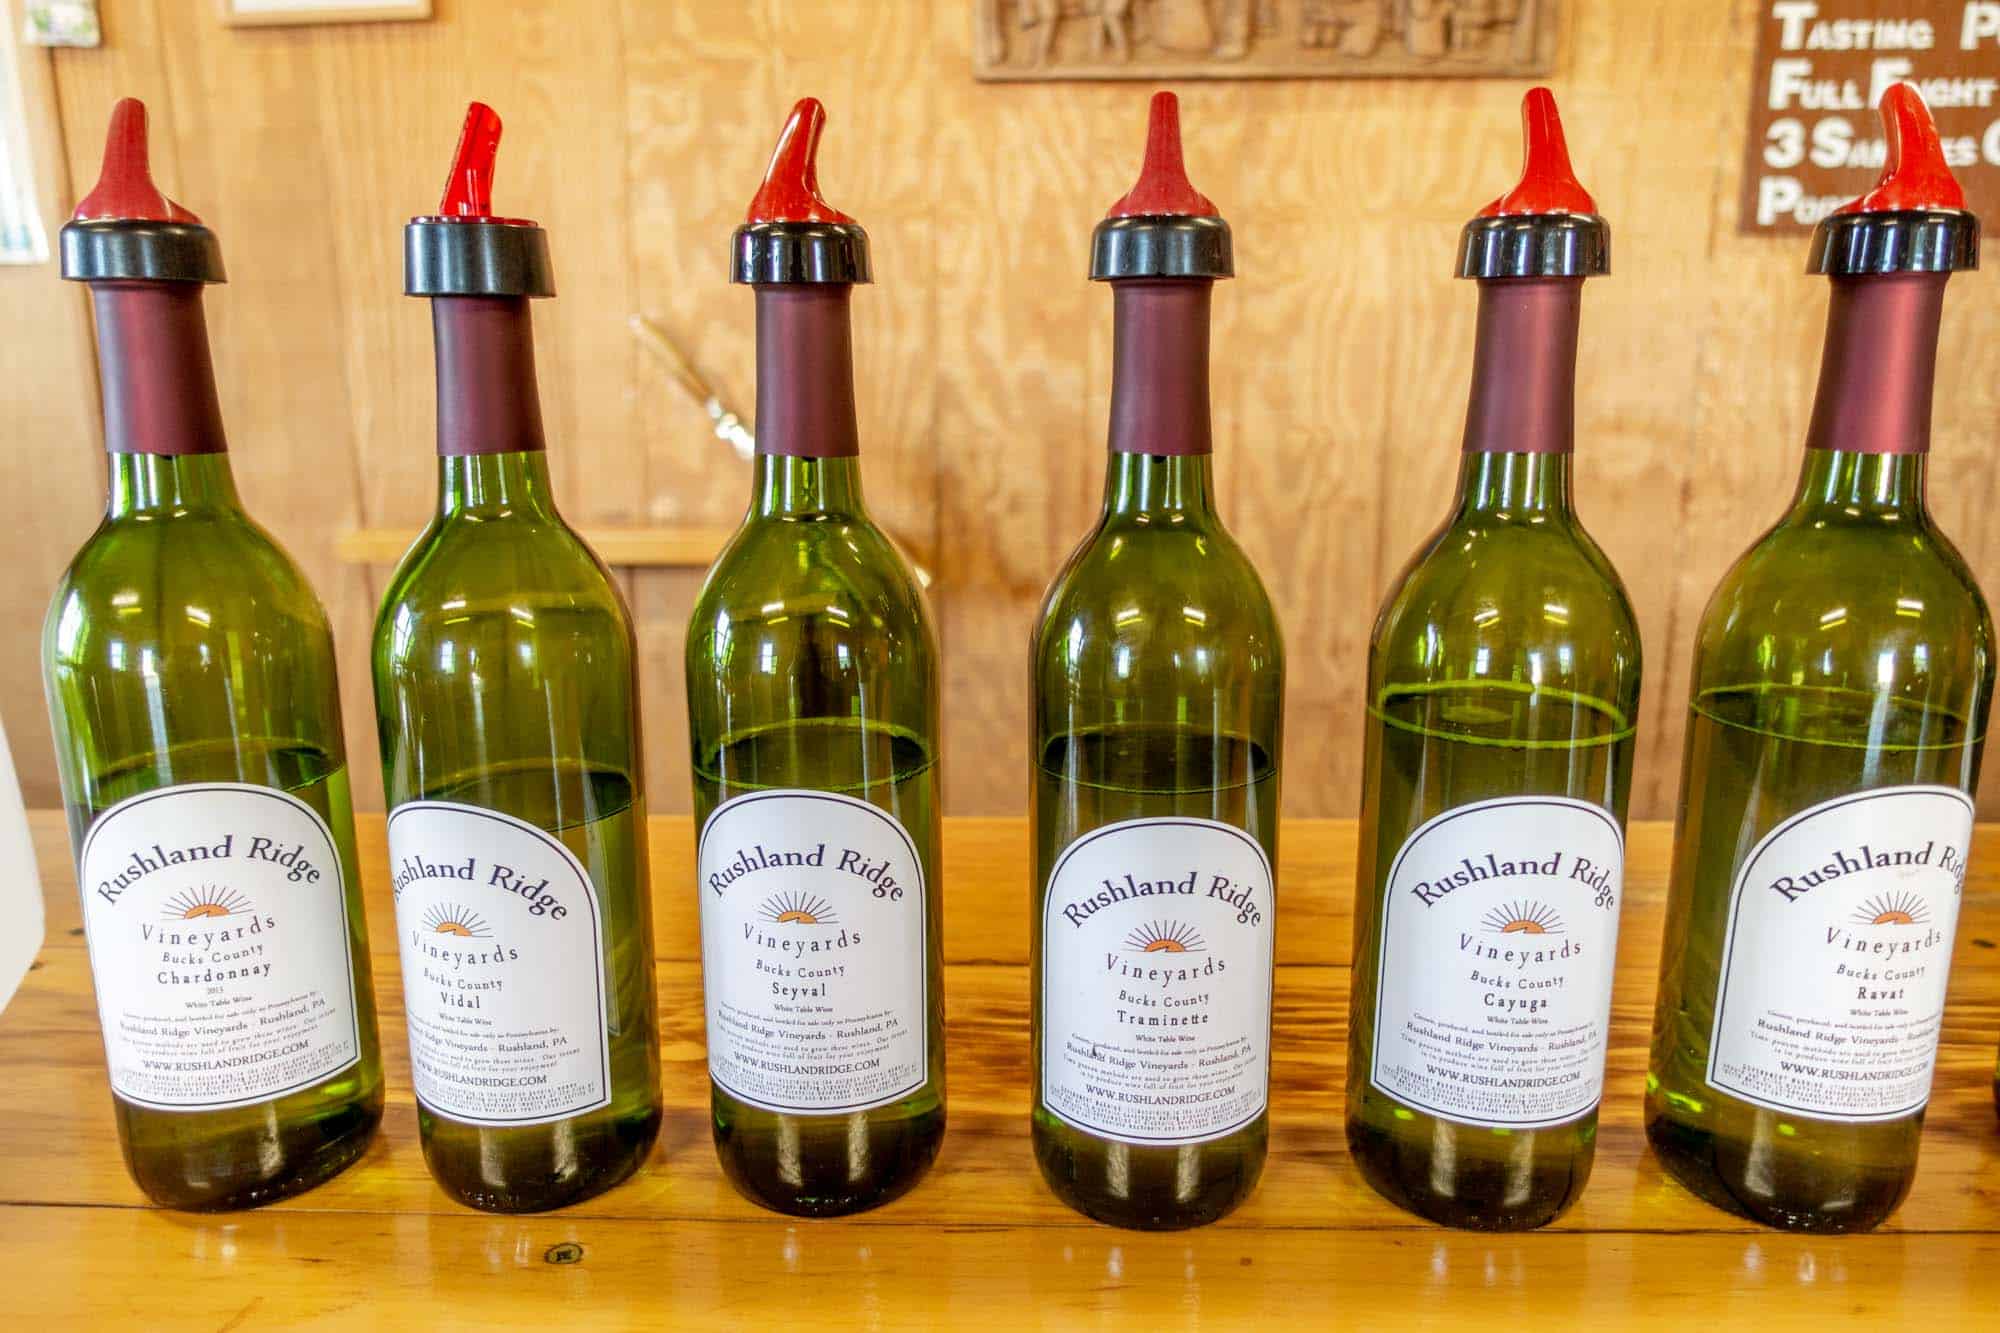 Bottles of Rushland Ridge wine